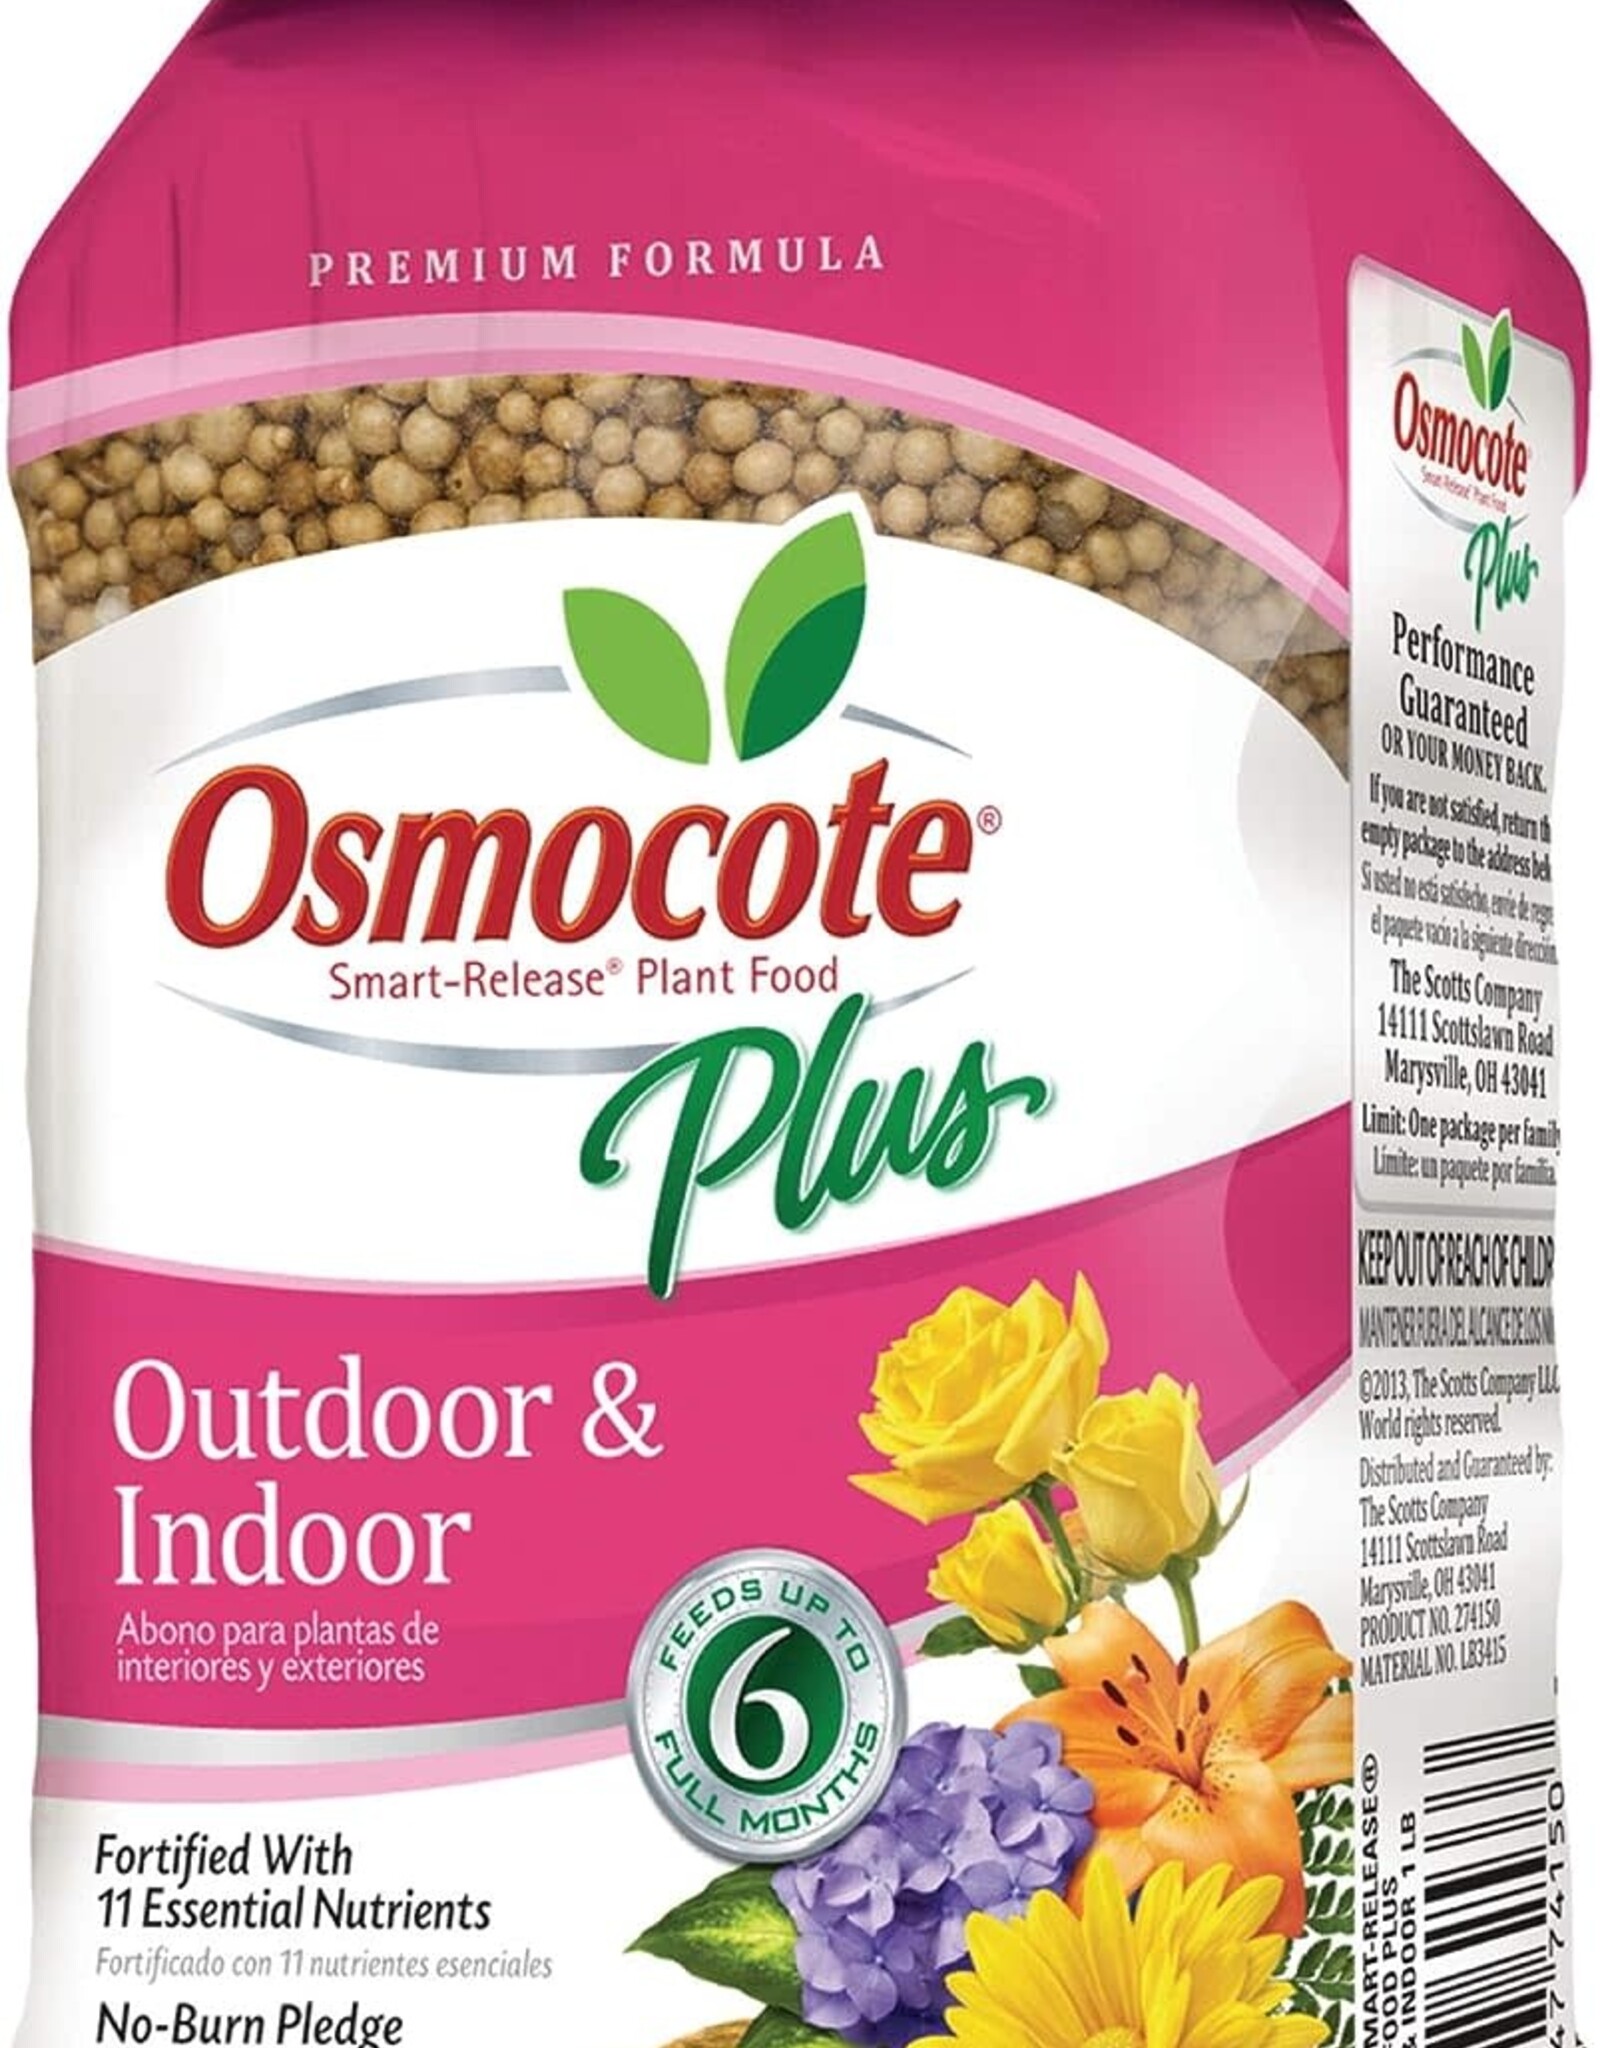 SCOTTS MIRACLE GRO PROD Osmocote® PLUS Outdoor & Indoor Plant Food 1b